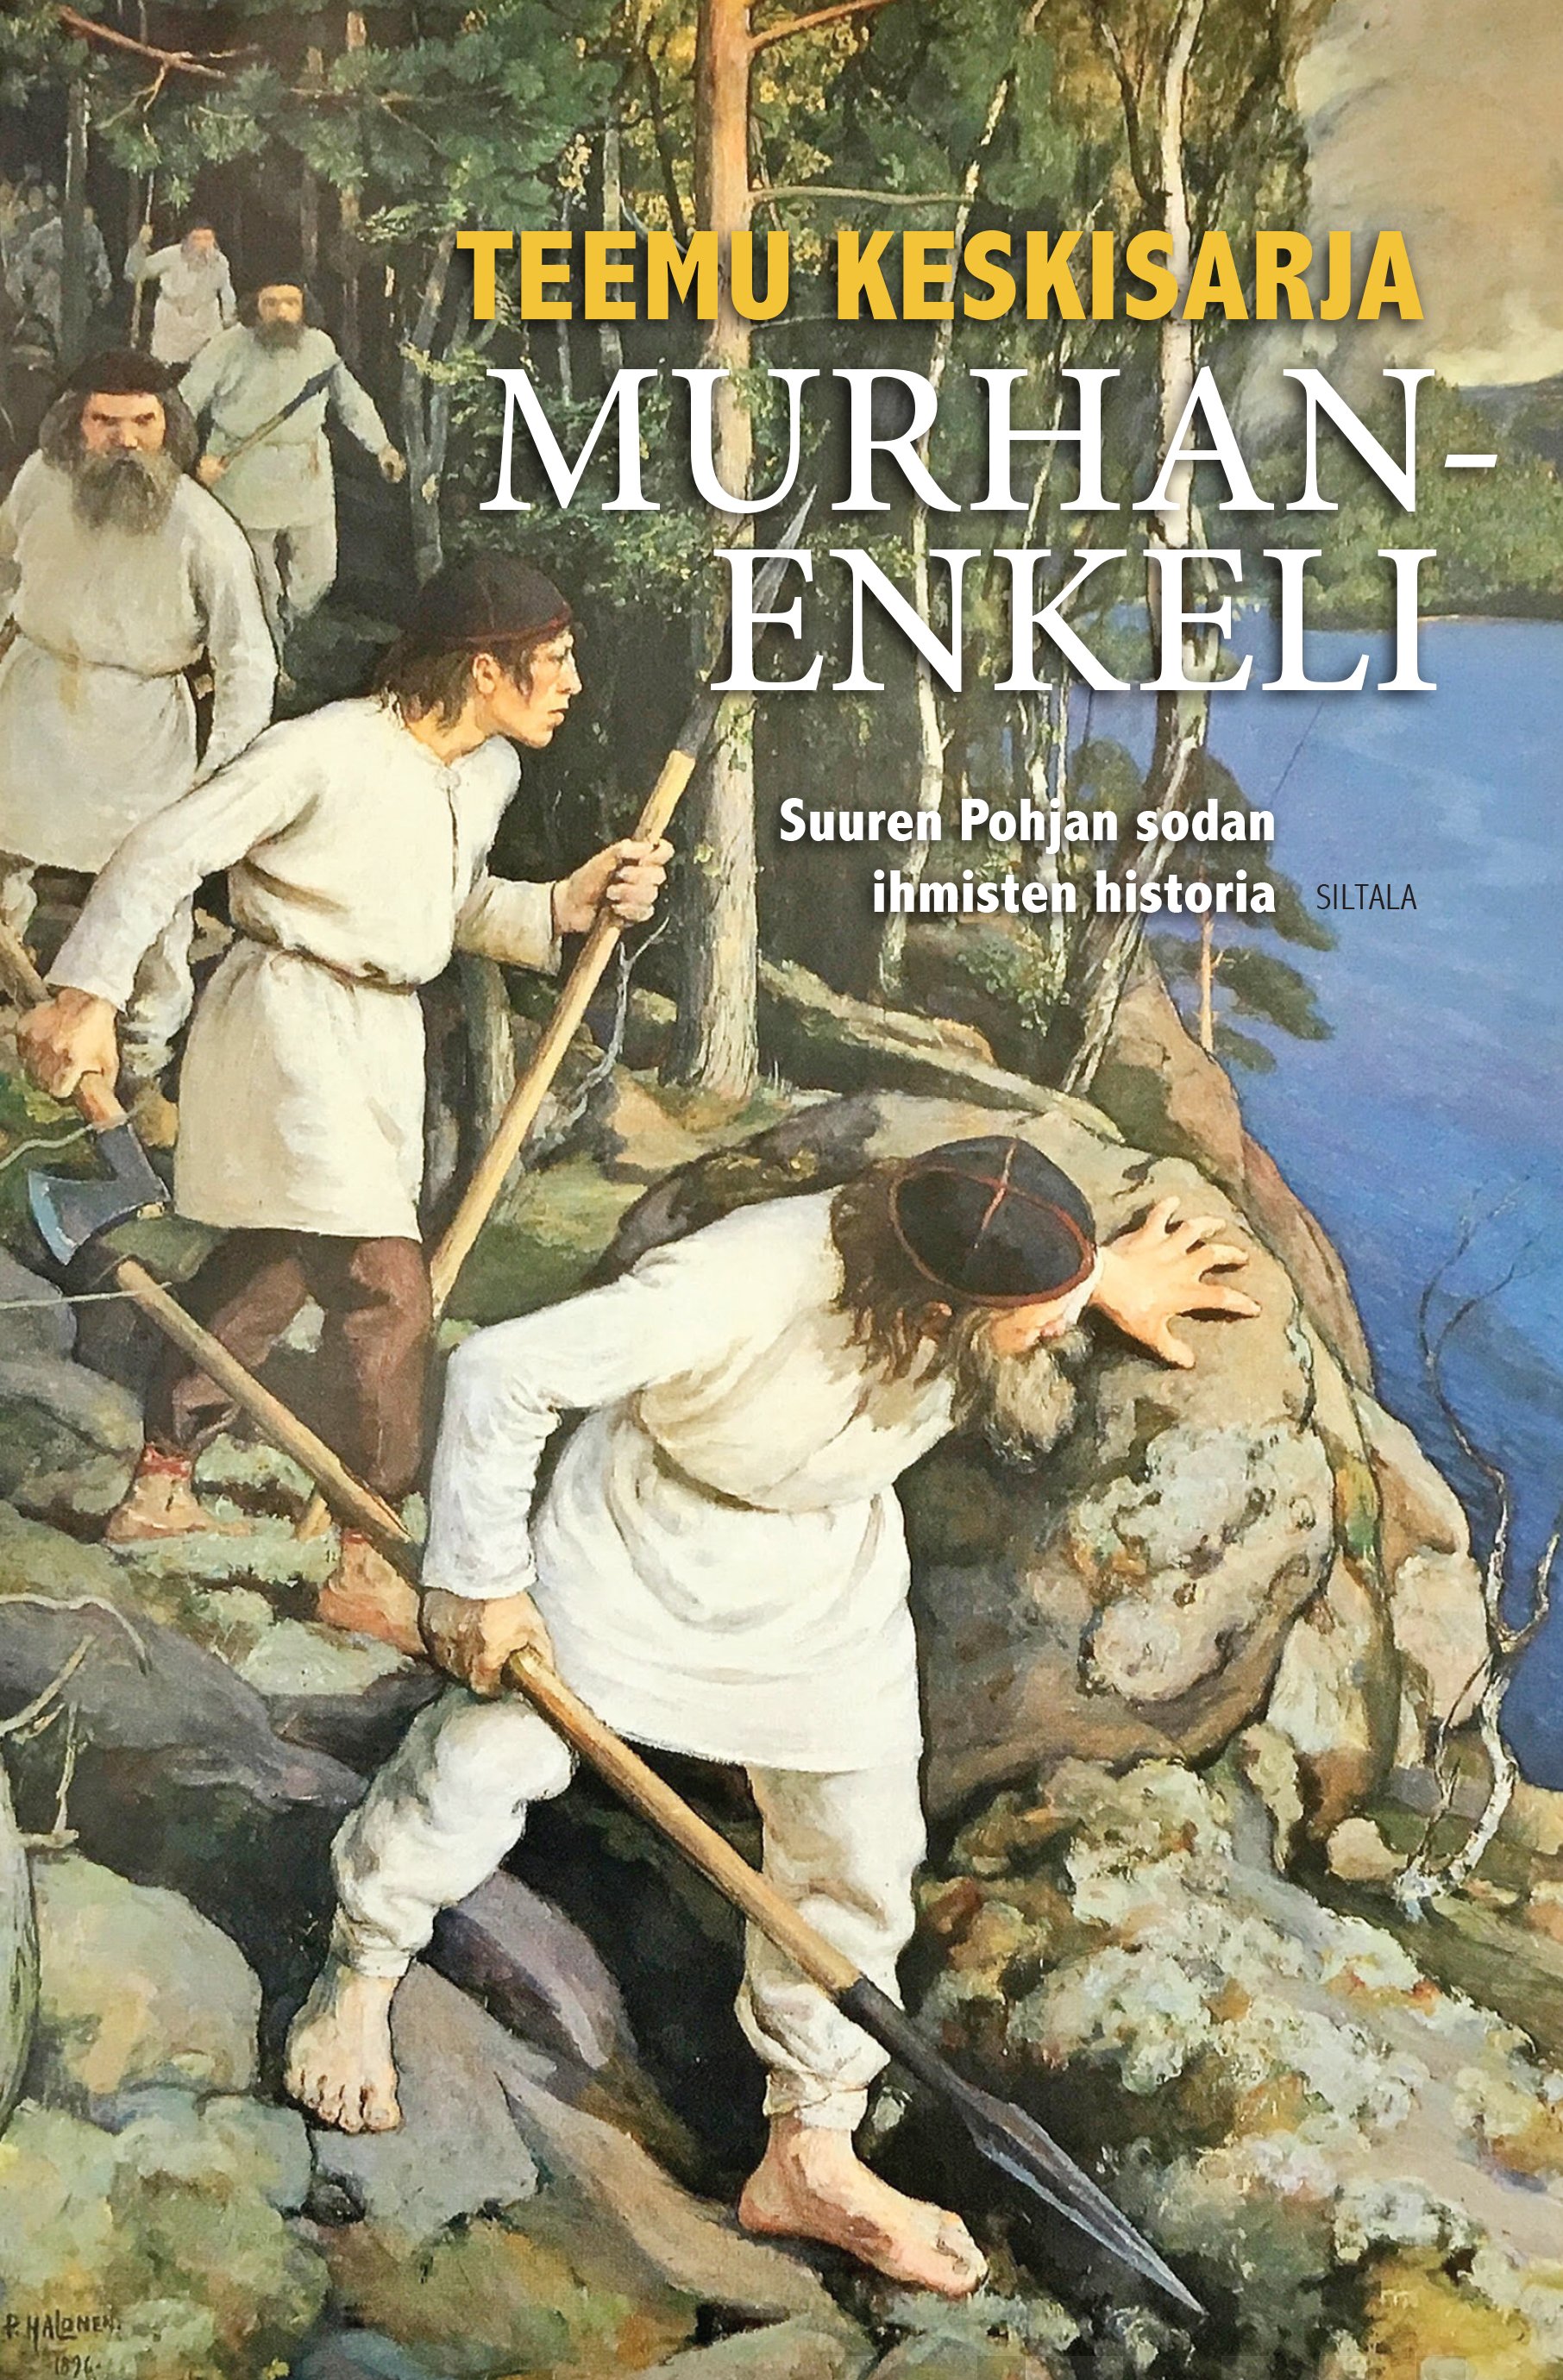 Post 2 Murhanenkeli book cover